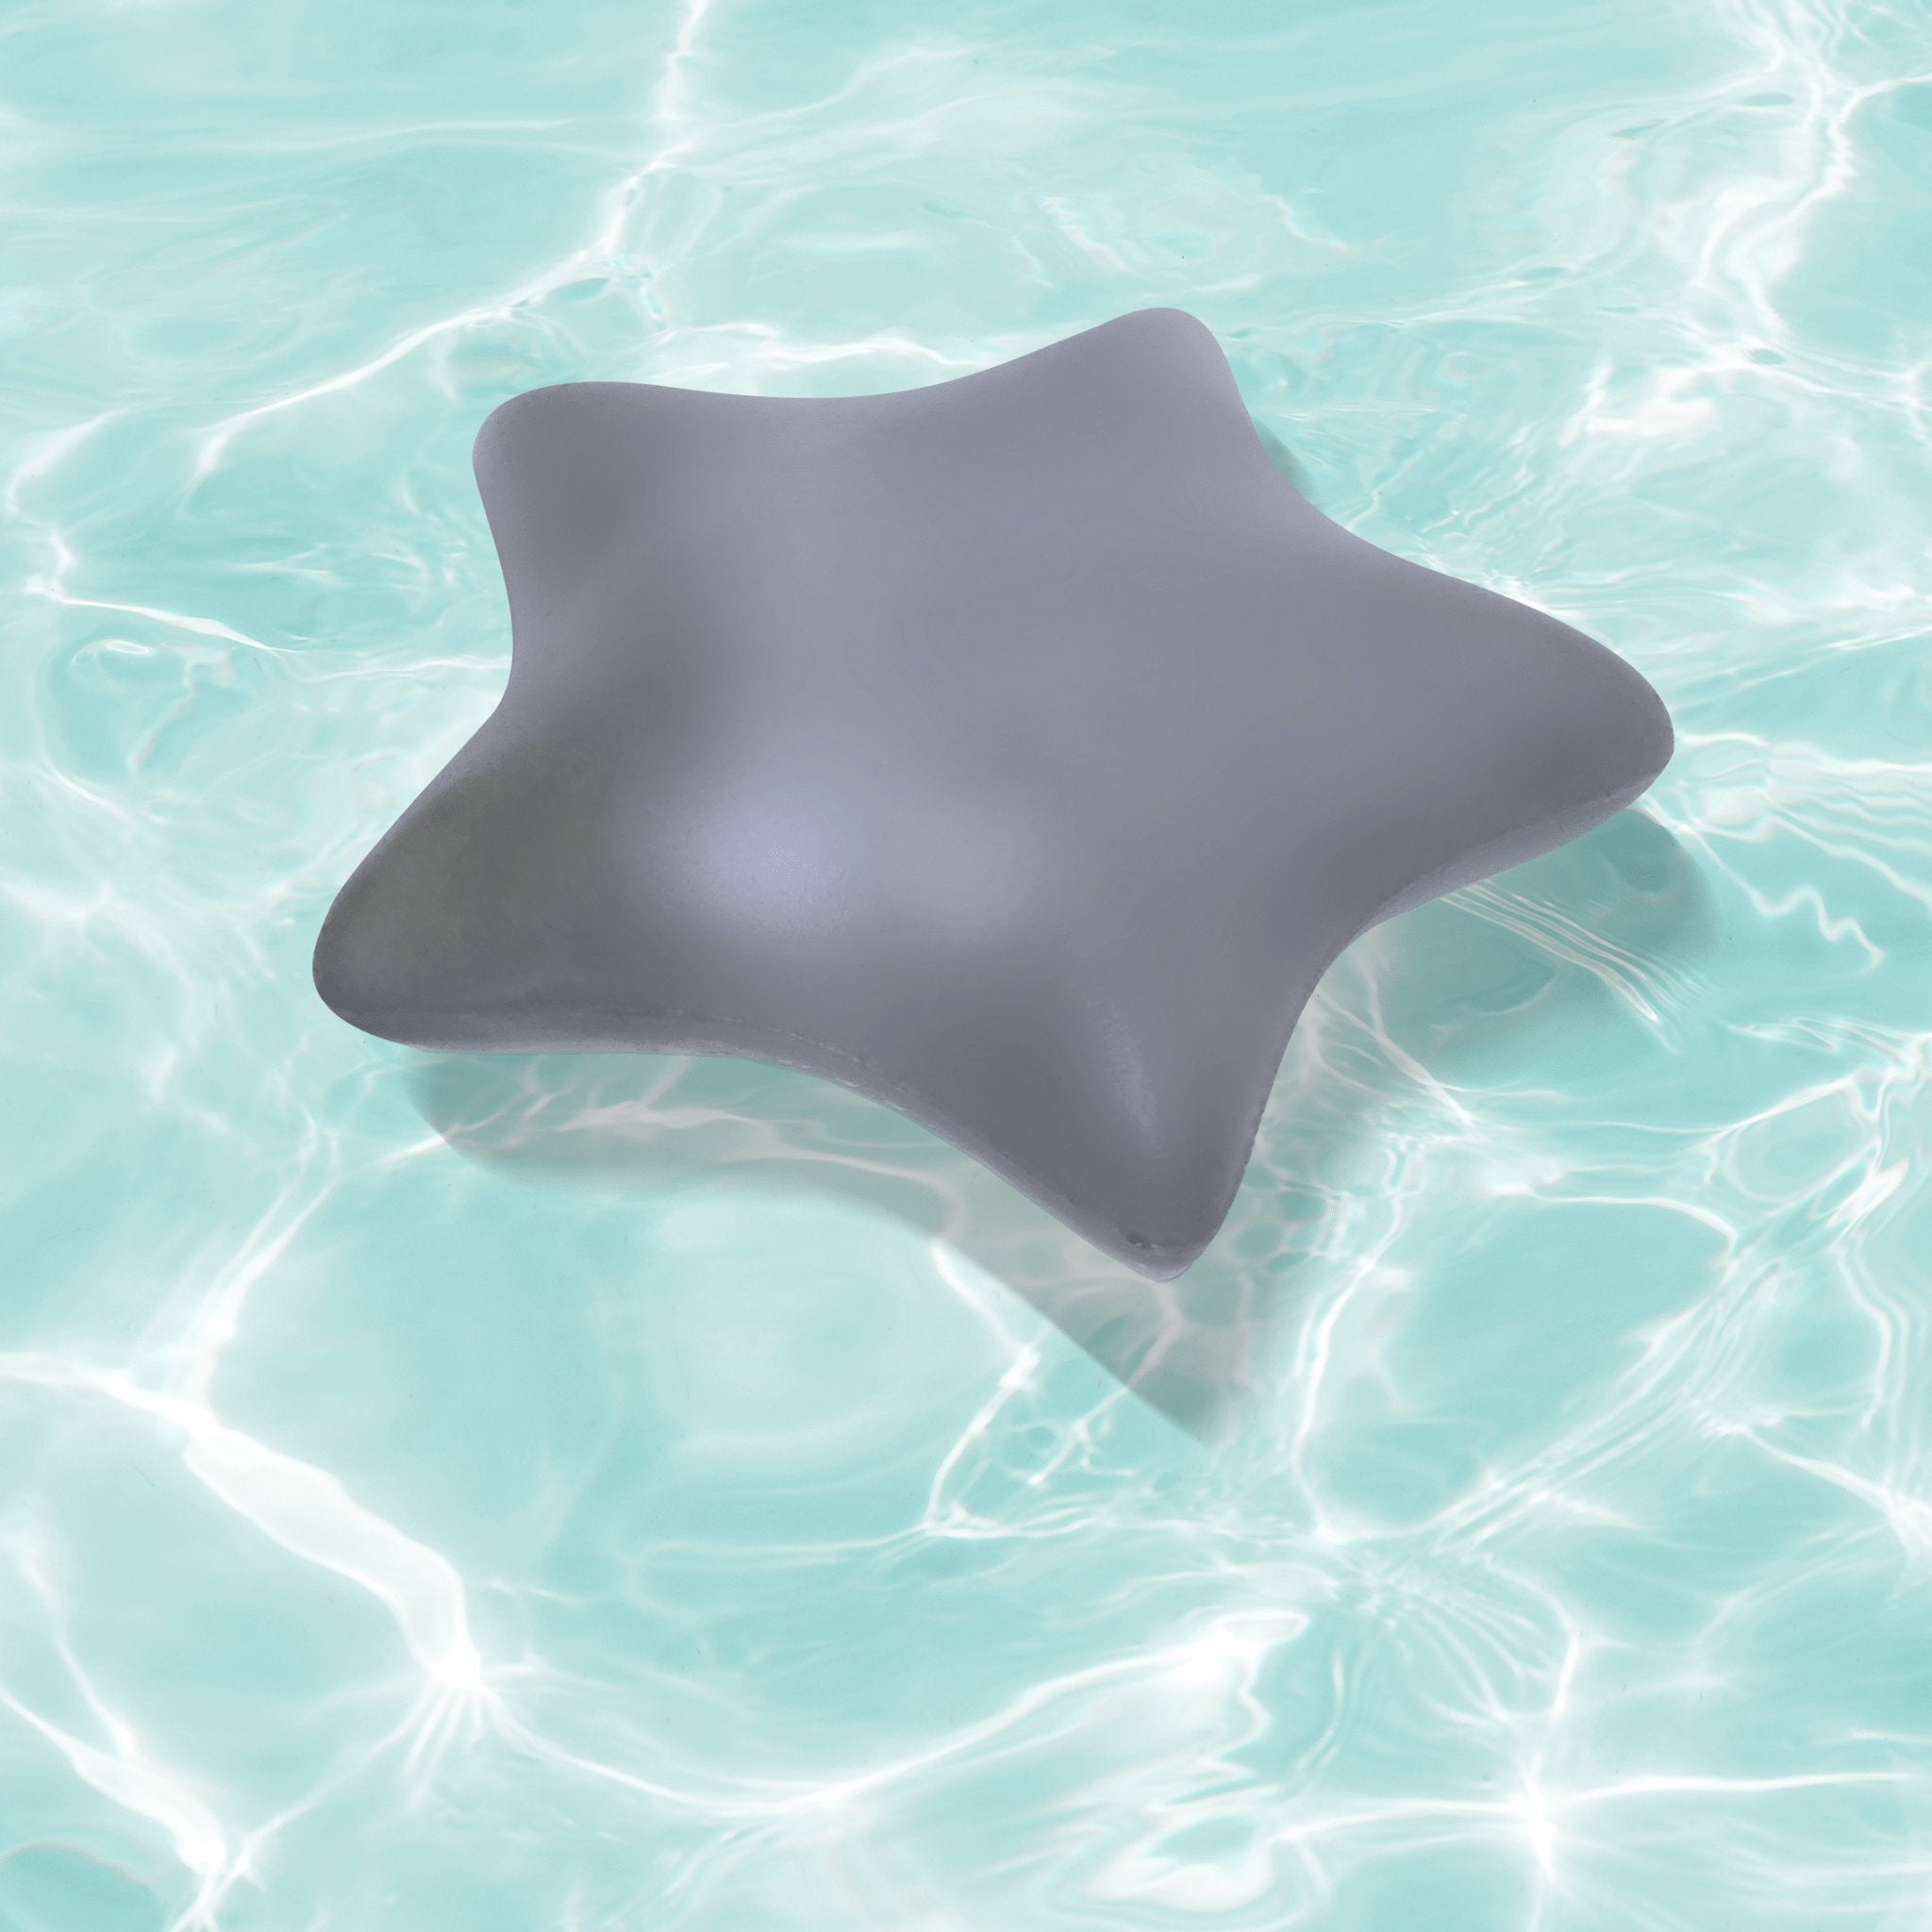 Hot Tub Cleaning Sponge | Oil-Absorbing Star Eraser - Wave Spas Europe